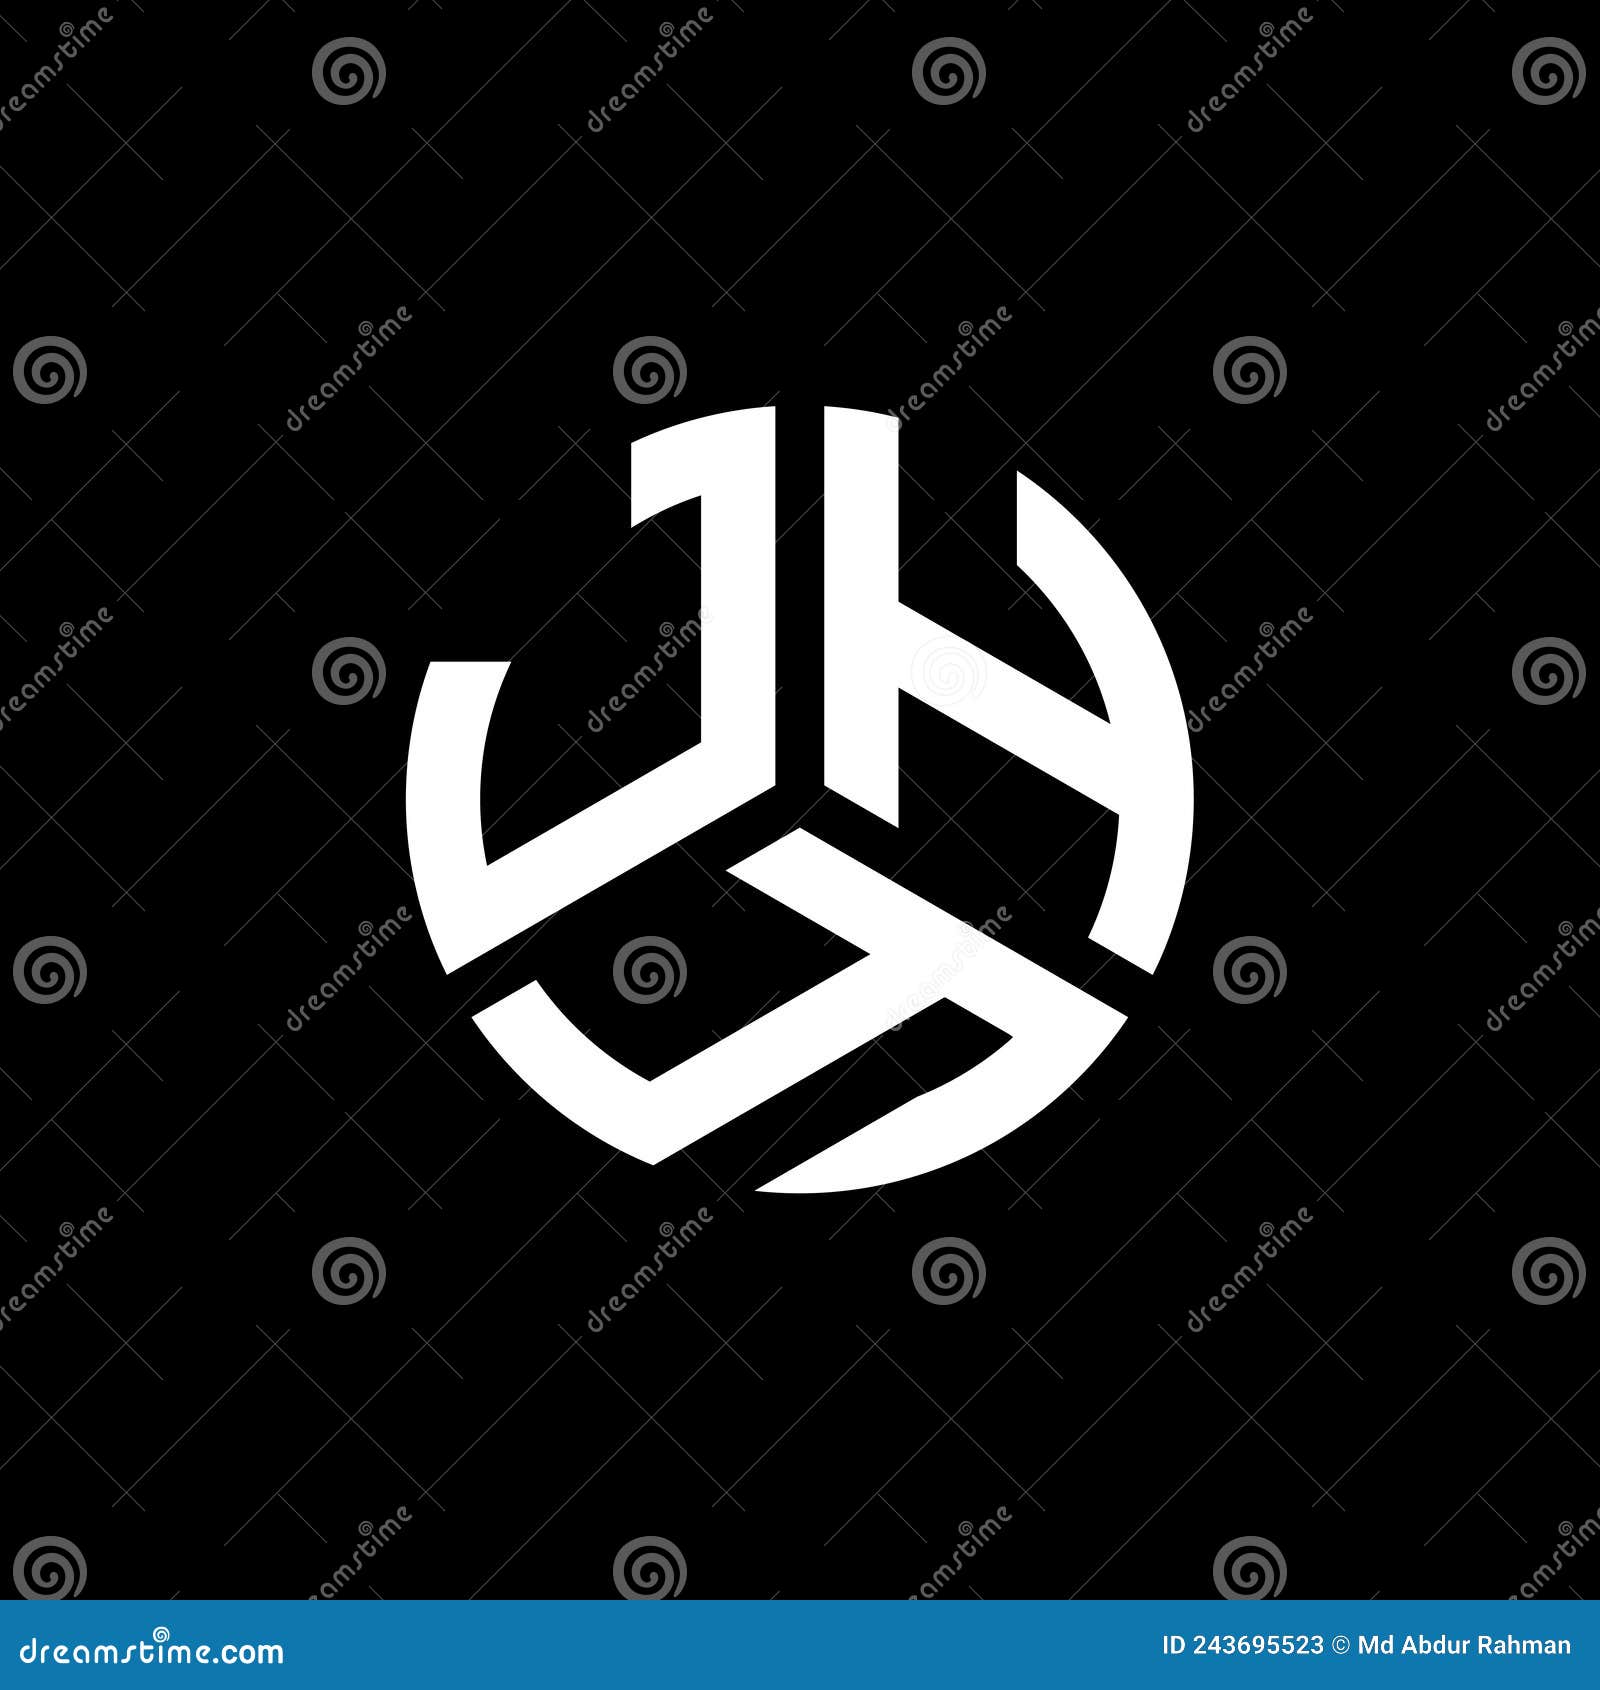 jhy letter logo  on black background. jhy creative initials letter logo concept. jhy letter 